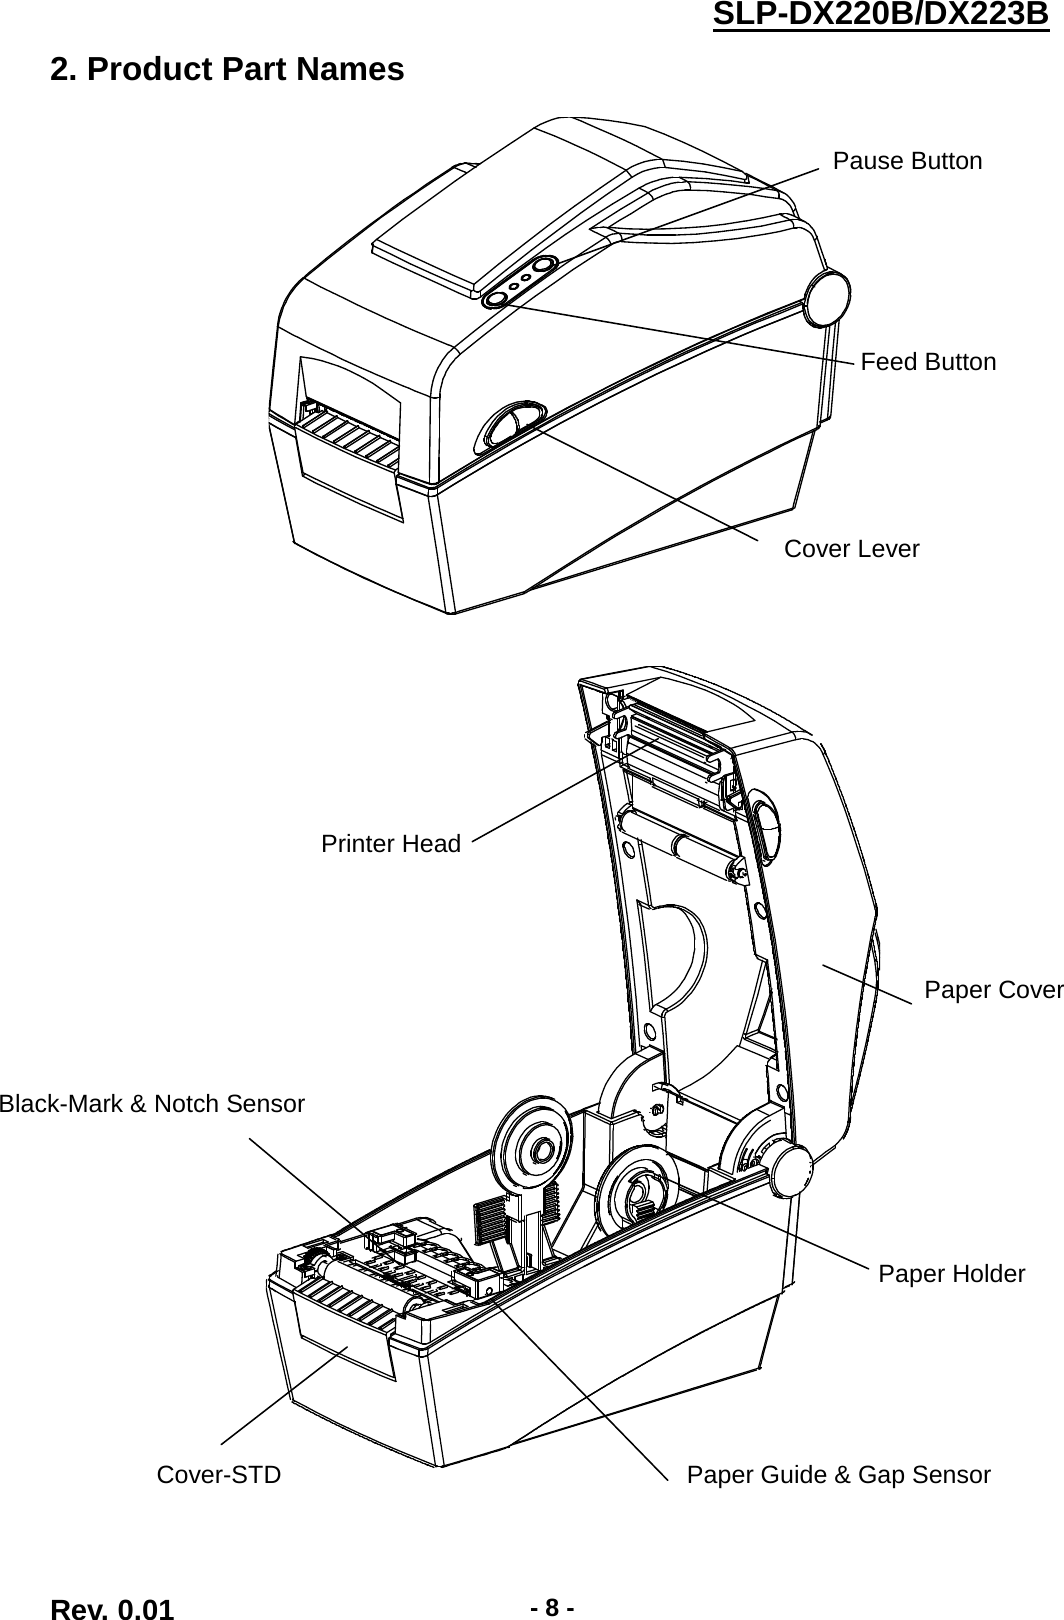  SLP-DX220B/DX223B  2. Product Part Names       Feed Button Cover Lever Printer Head Paper Holder Paper Guide &amp; Gap Sensor  Black-Mark &amp; Notch Sensor  Pause Button  Paper Cover Cover-STD Rev. 0.01  - 8 - 